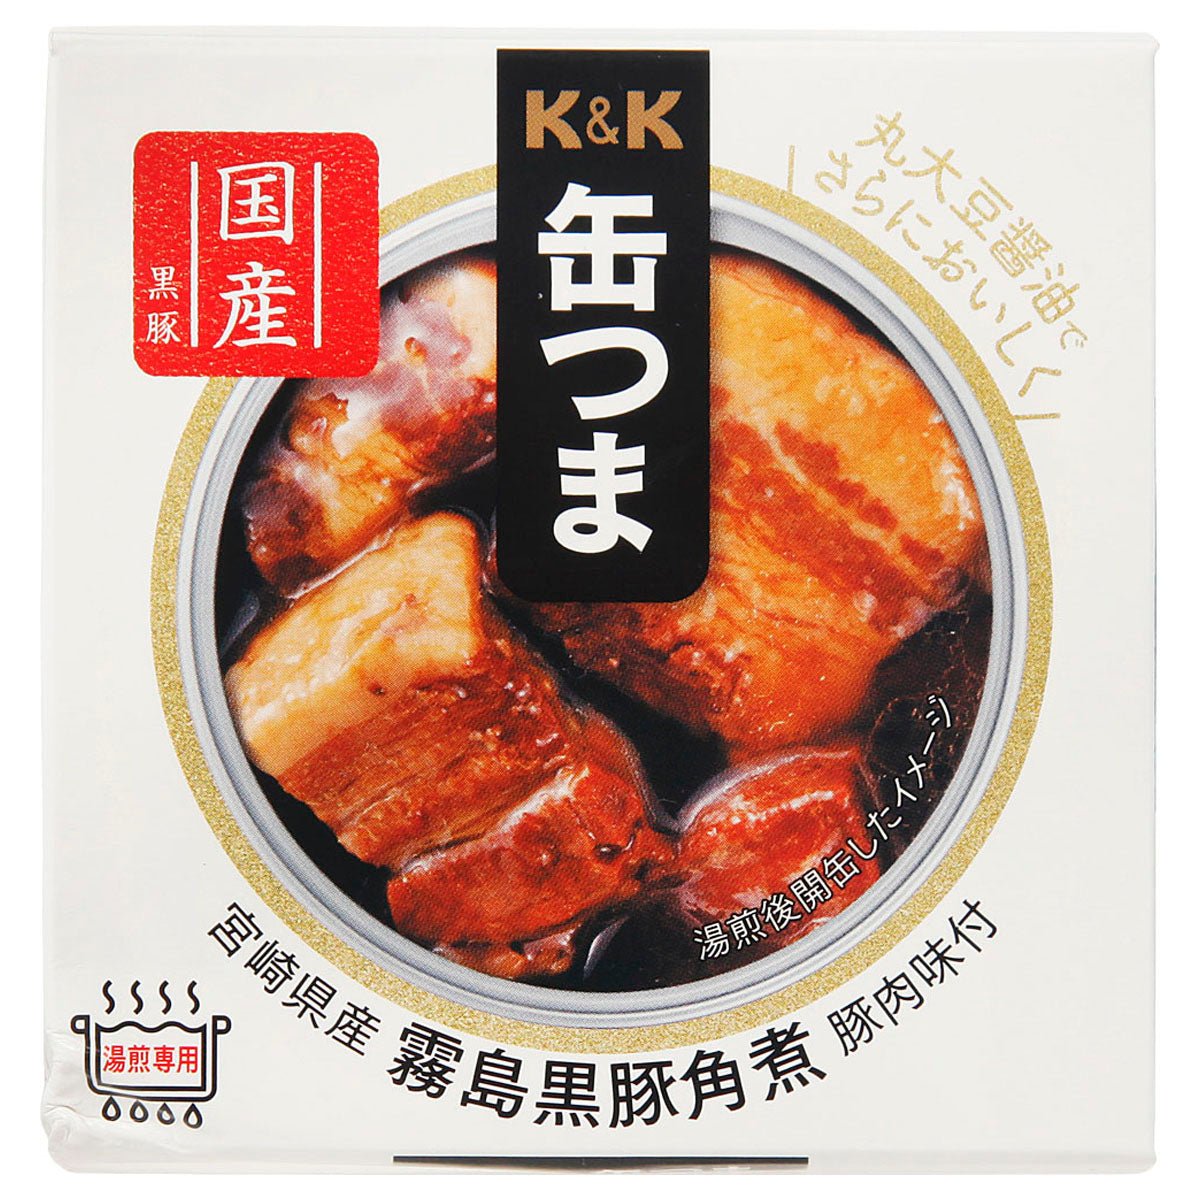 K & K can Tsuma Kirishima black pork kakukakushi from Miyazaki Prefecture